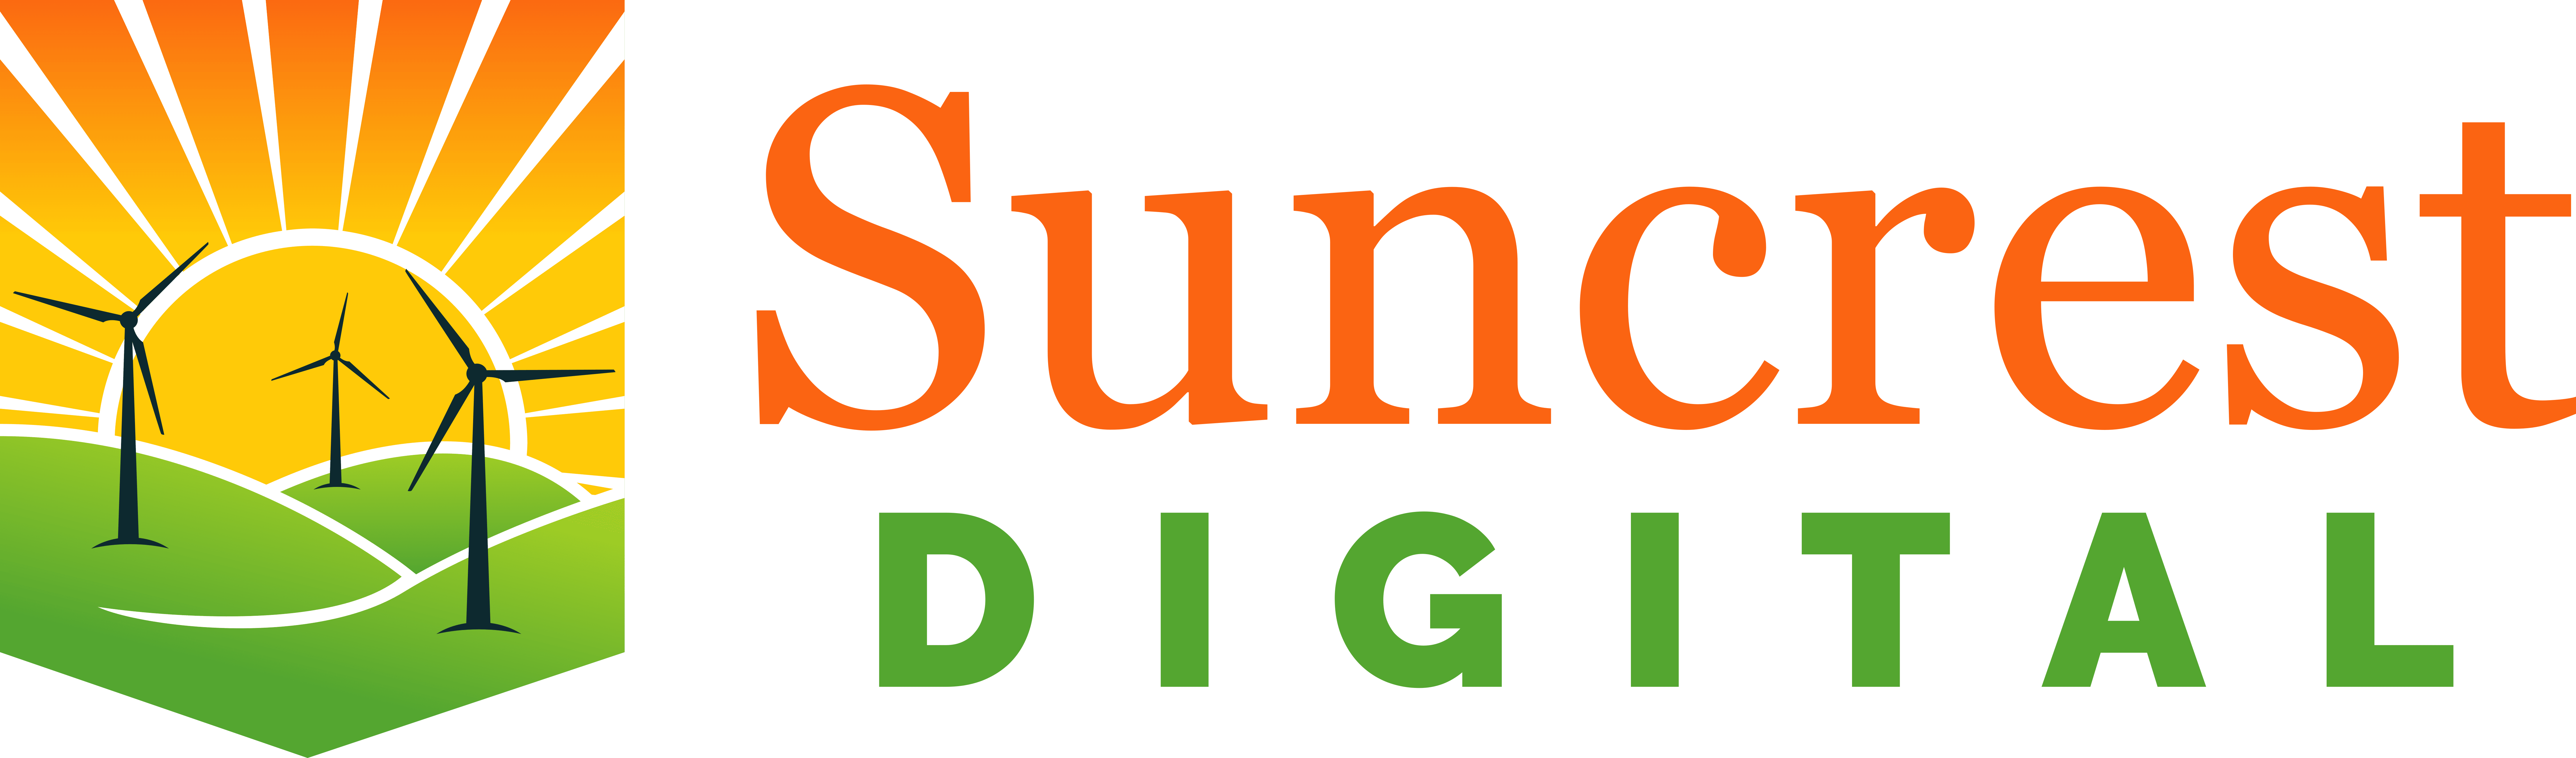 Suncrest Digital